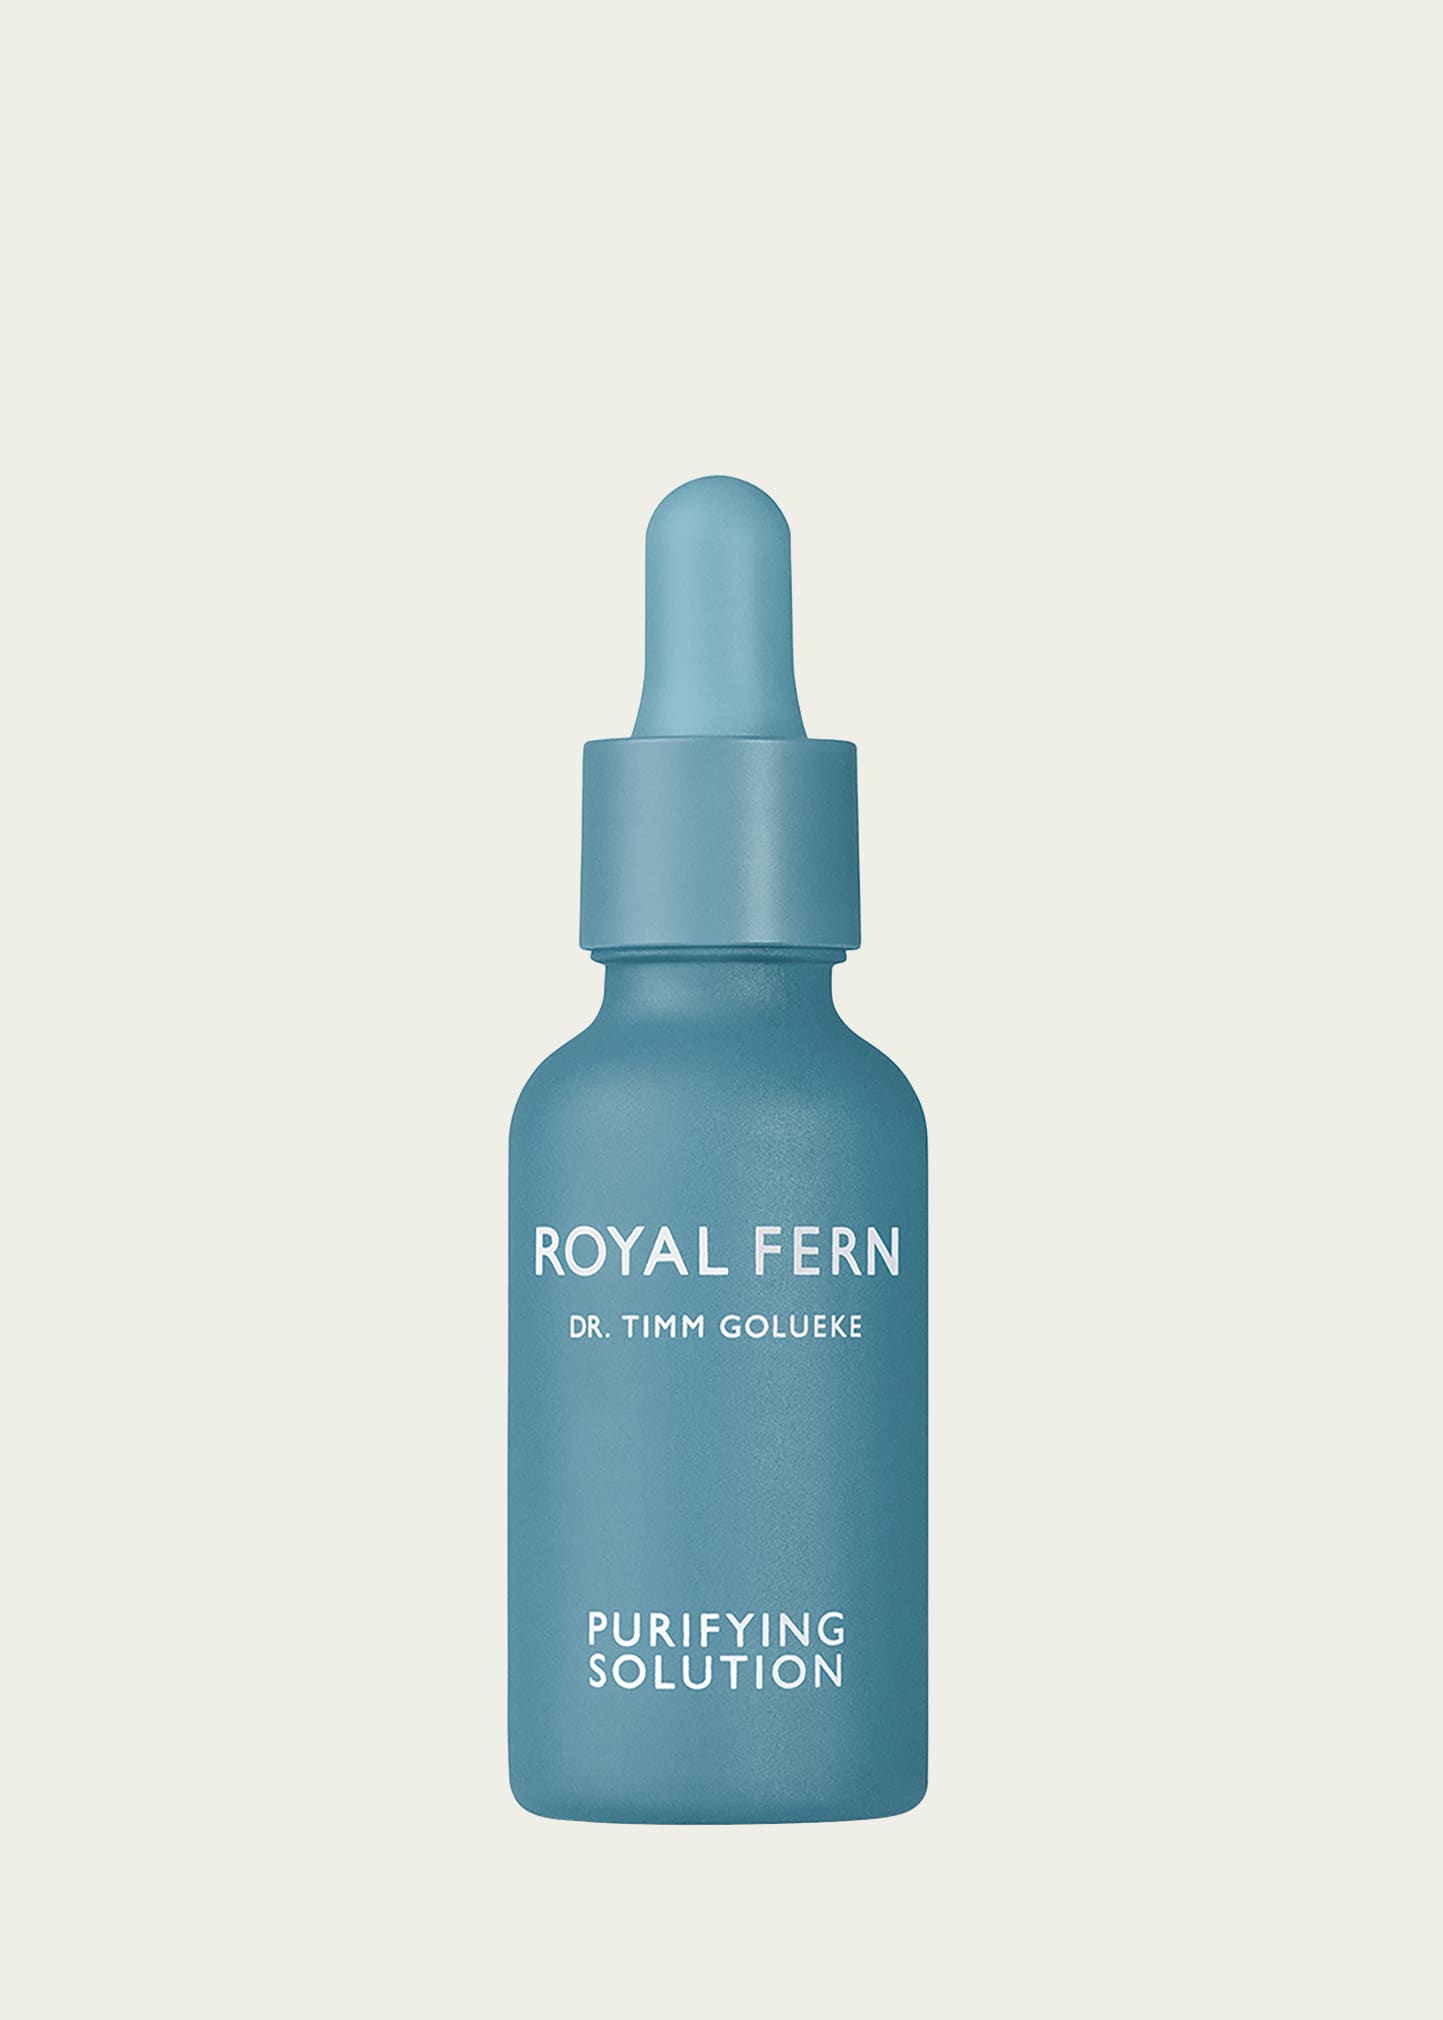 Royal Fern Purifying Solution